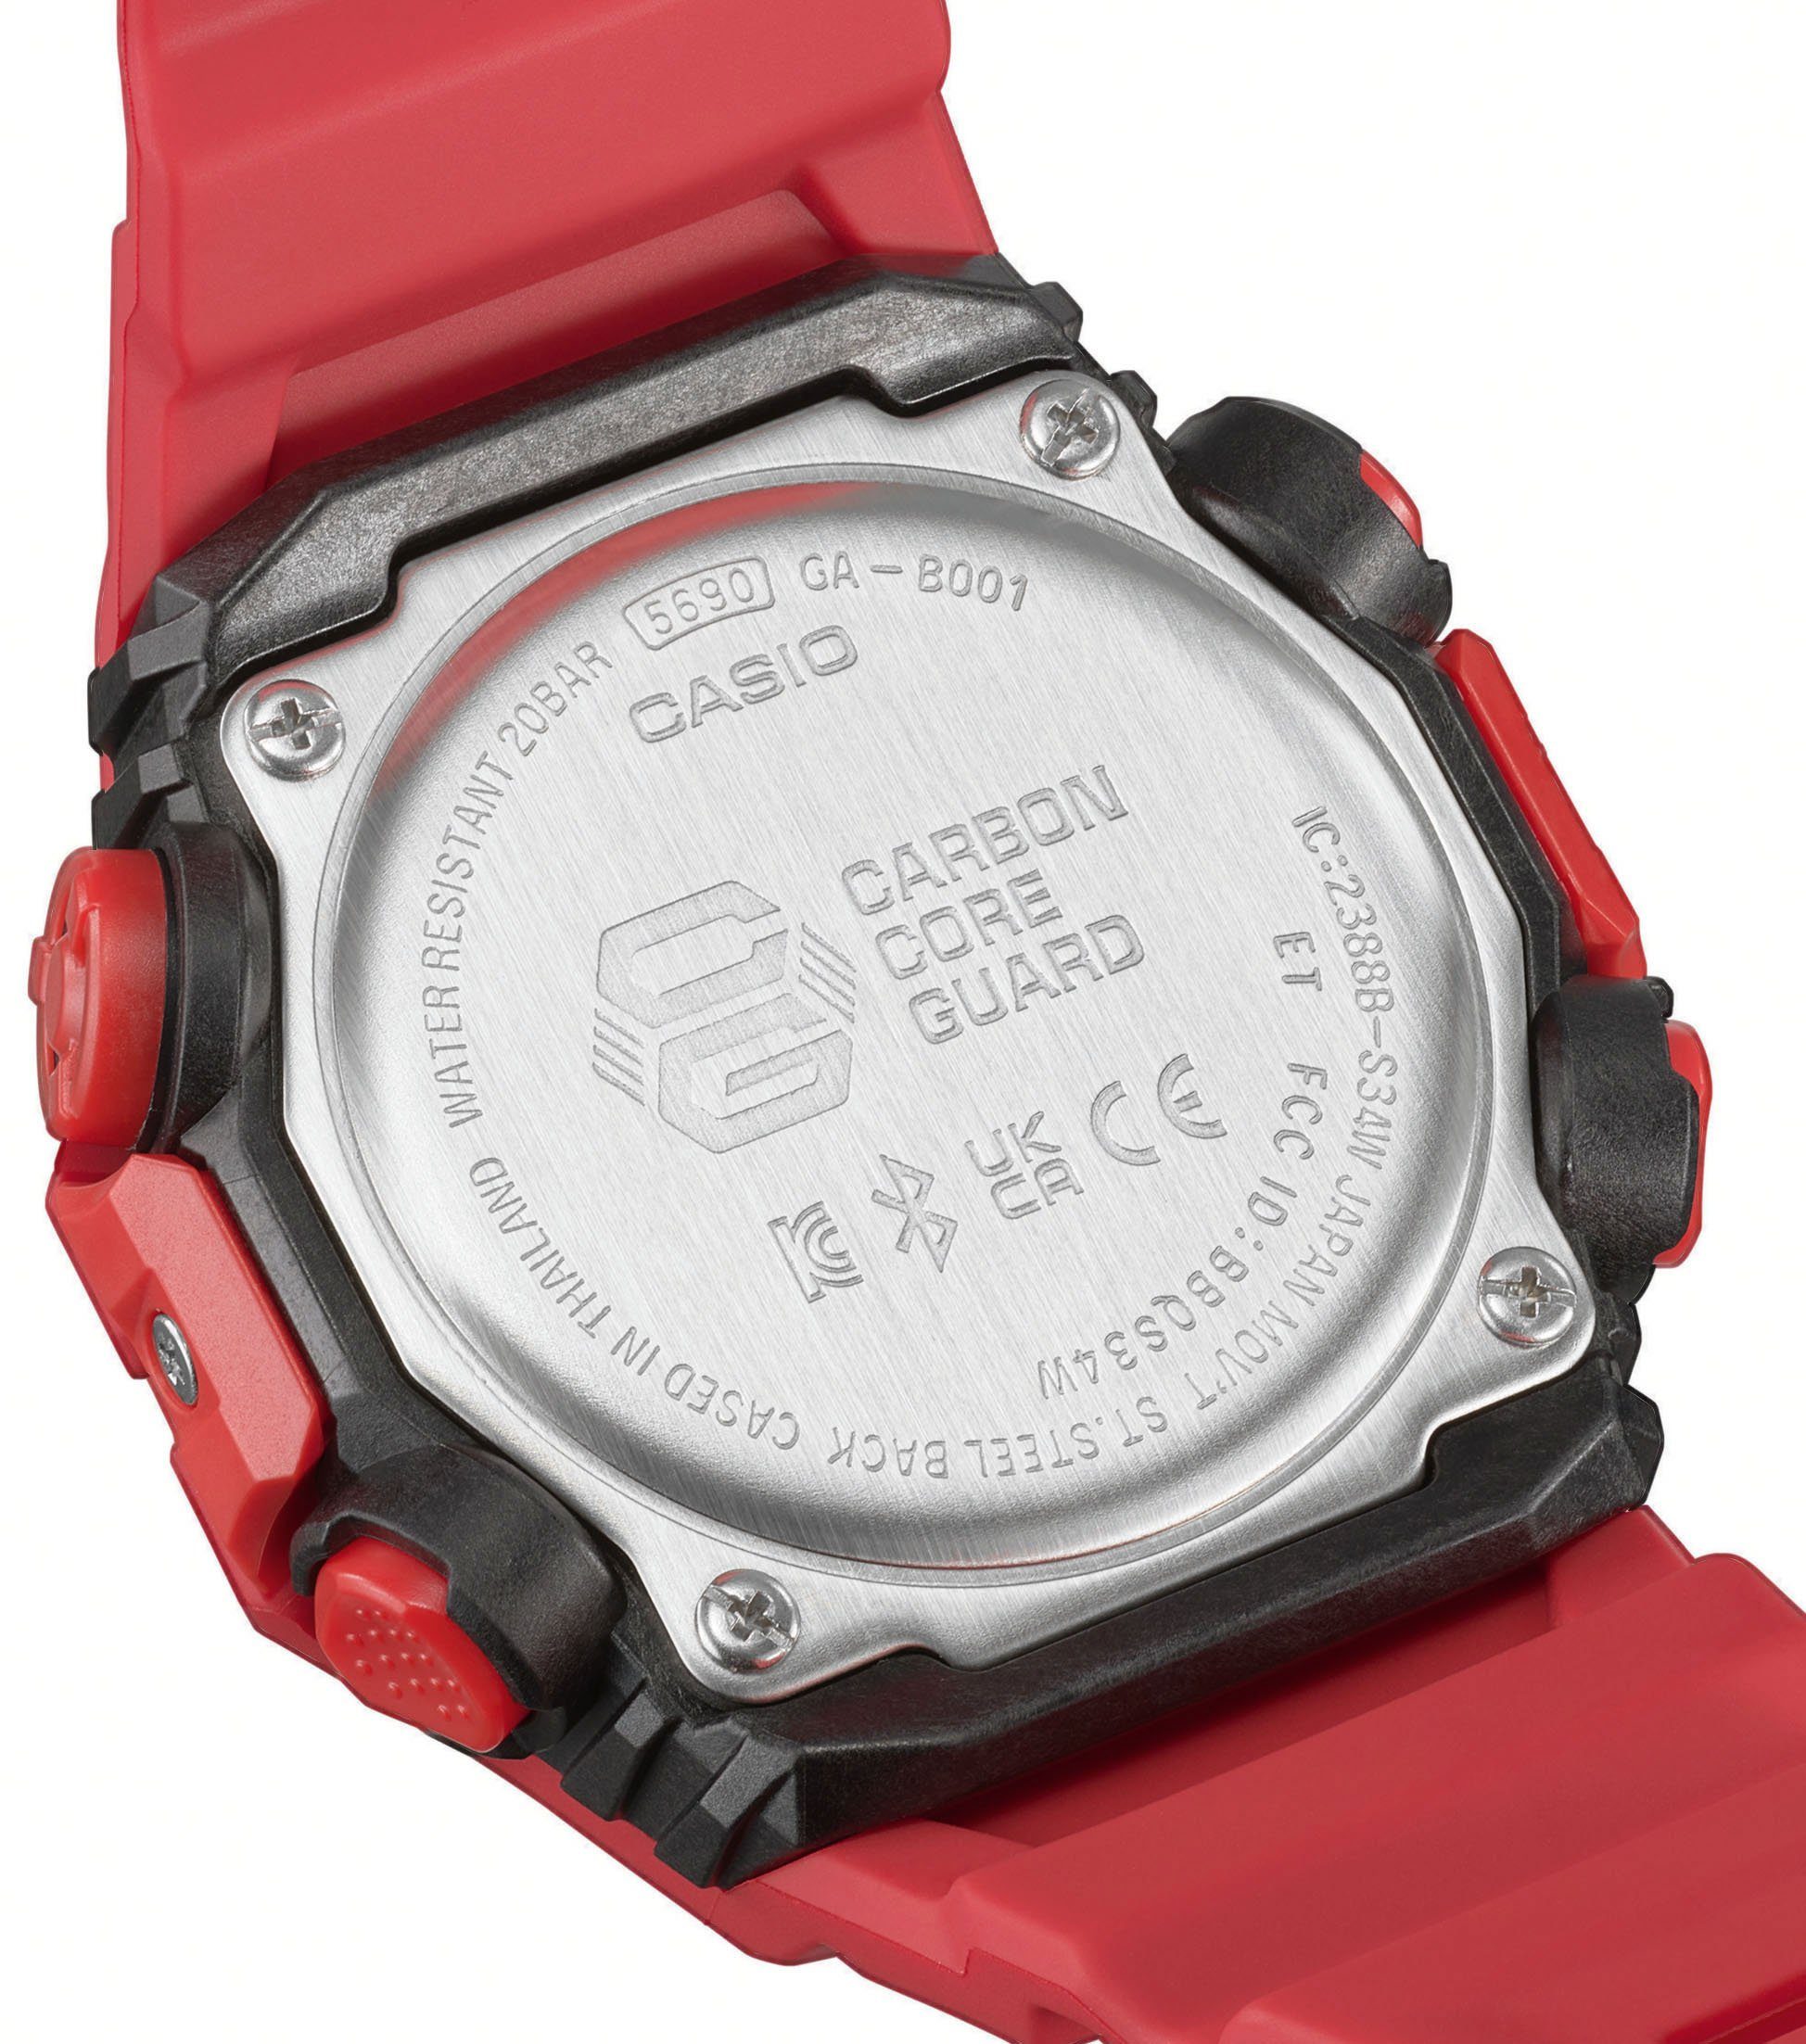 G-SHOCK Smartwatch GA-B001-4AER CASIO